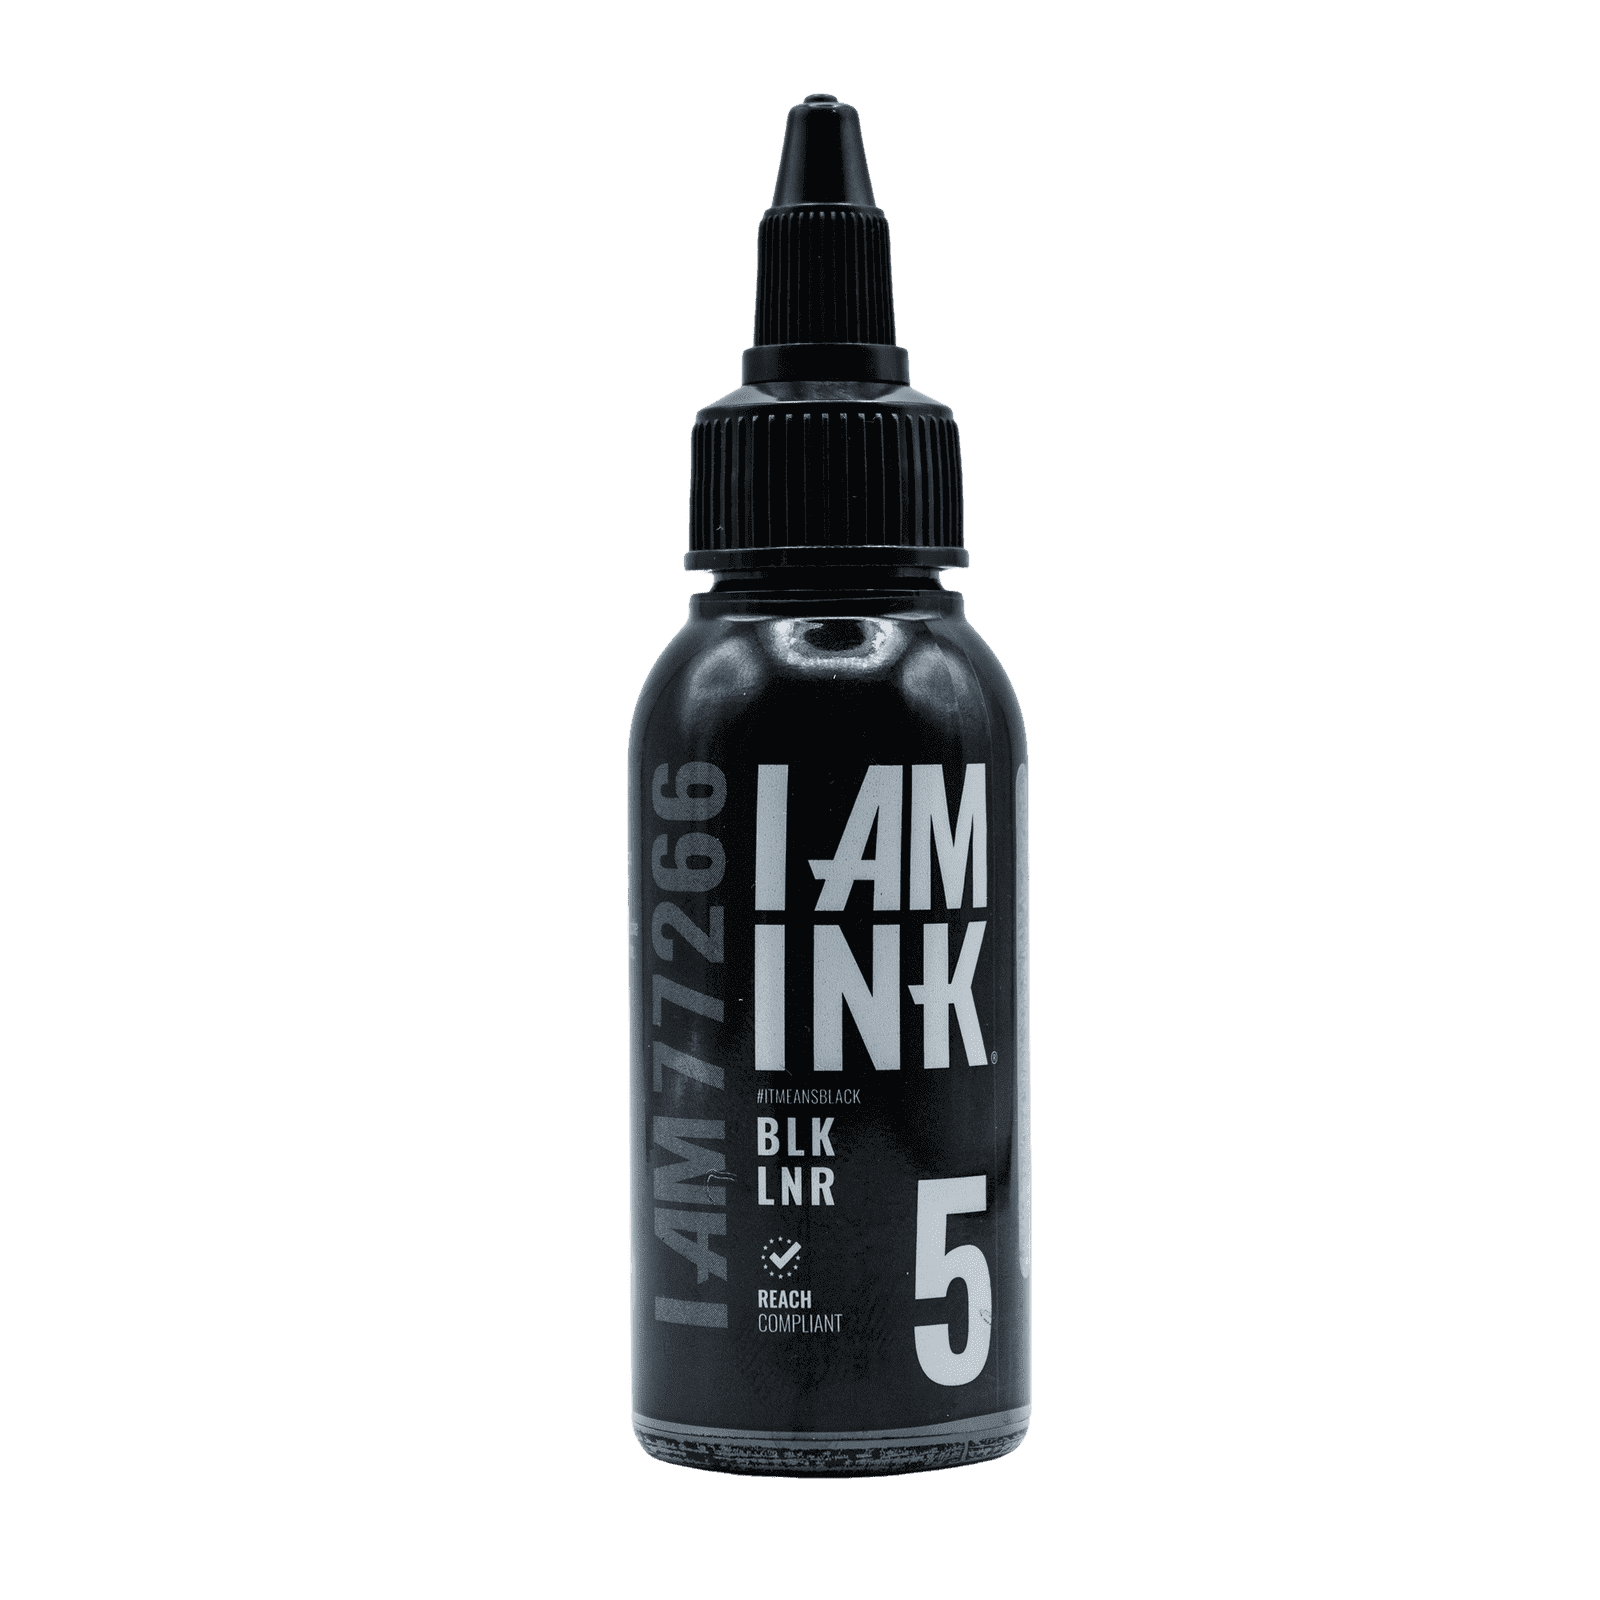 I AM INK First Generation 5 BLK LNR